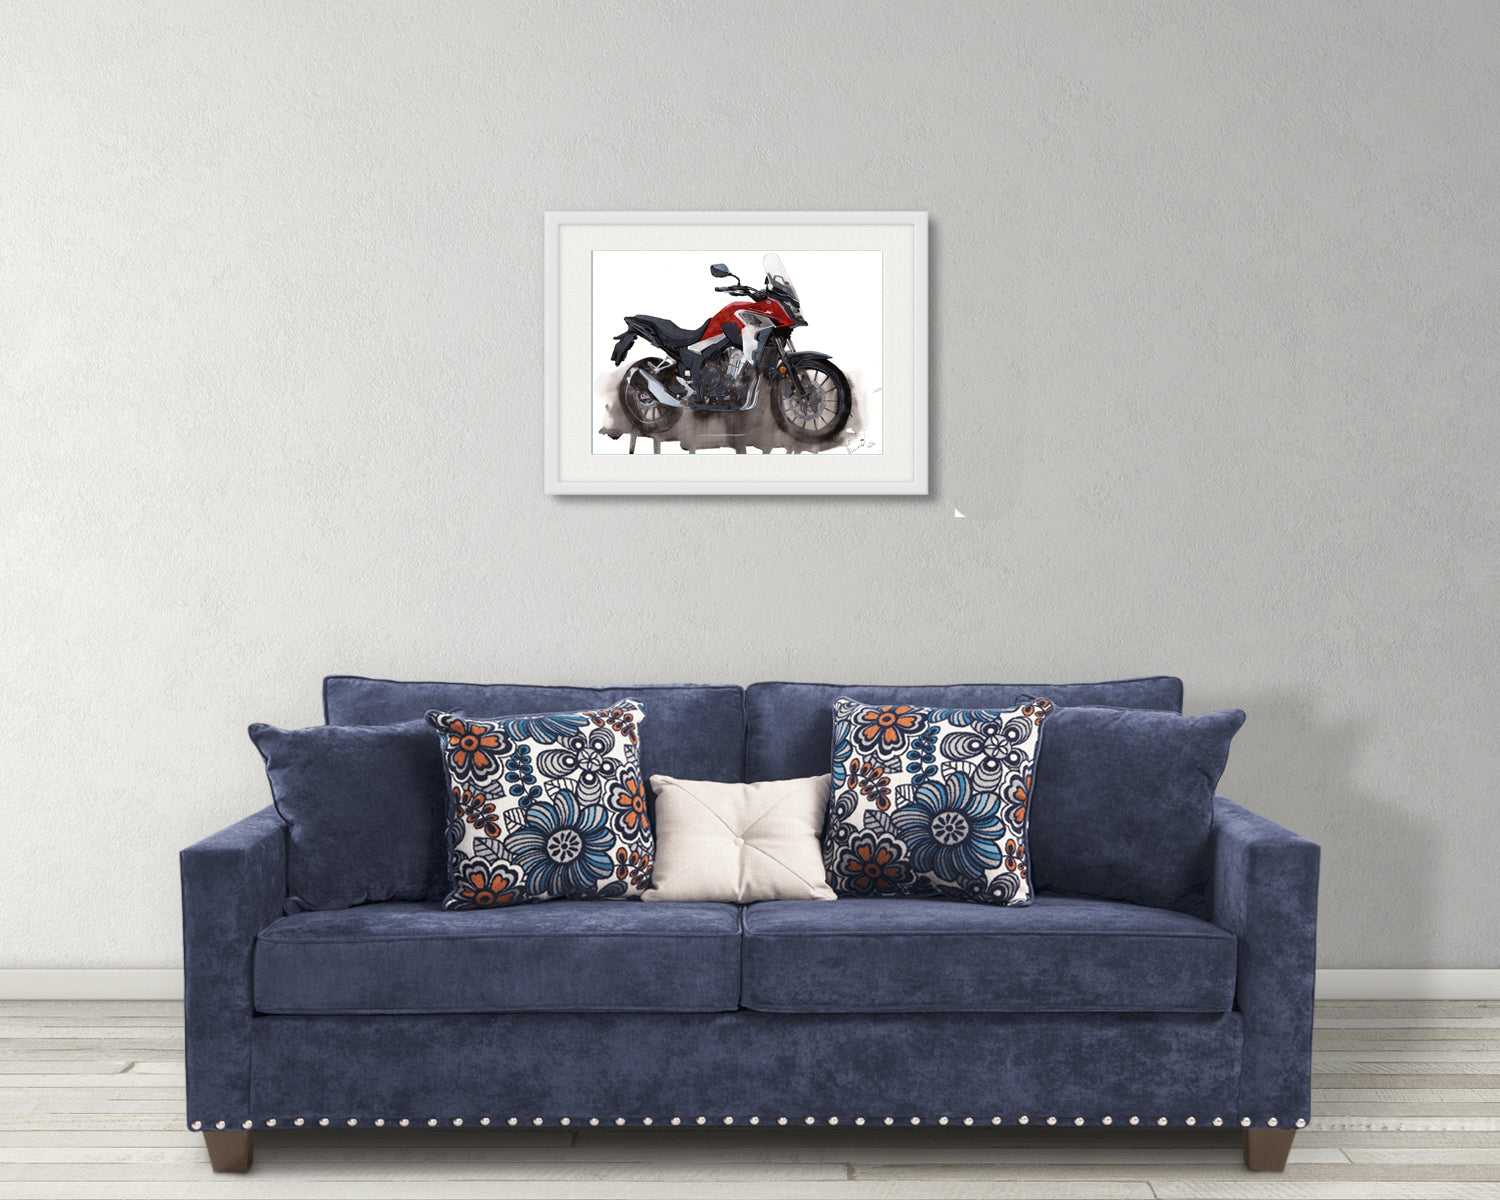 Painting of a Honda CB500 Motorcycle Limited Print Bike ArtbyMyleslaurence